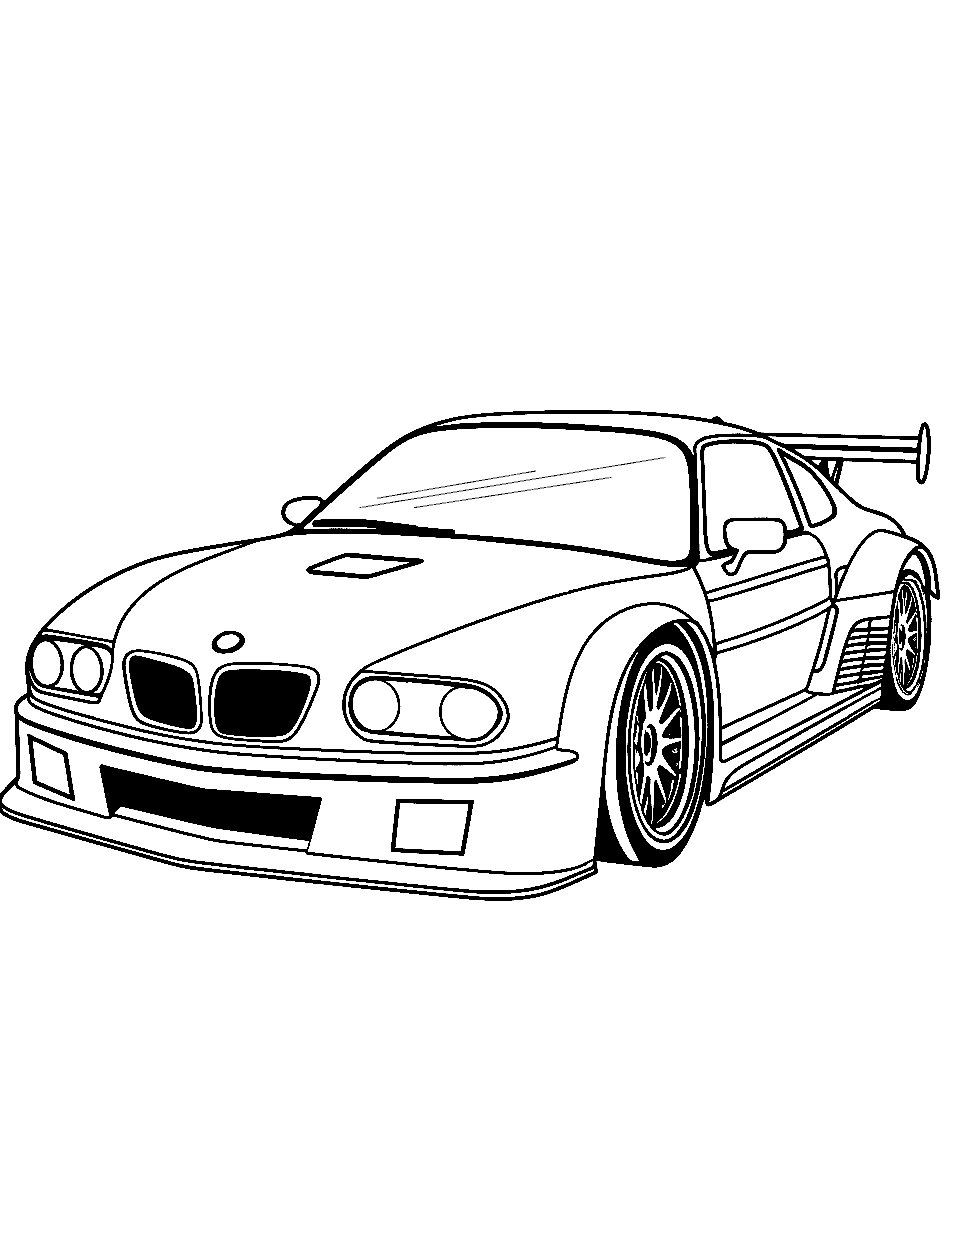 BMW Blitz Race Car Coloring Page - A BMW race car with a sleek, modern design.